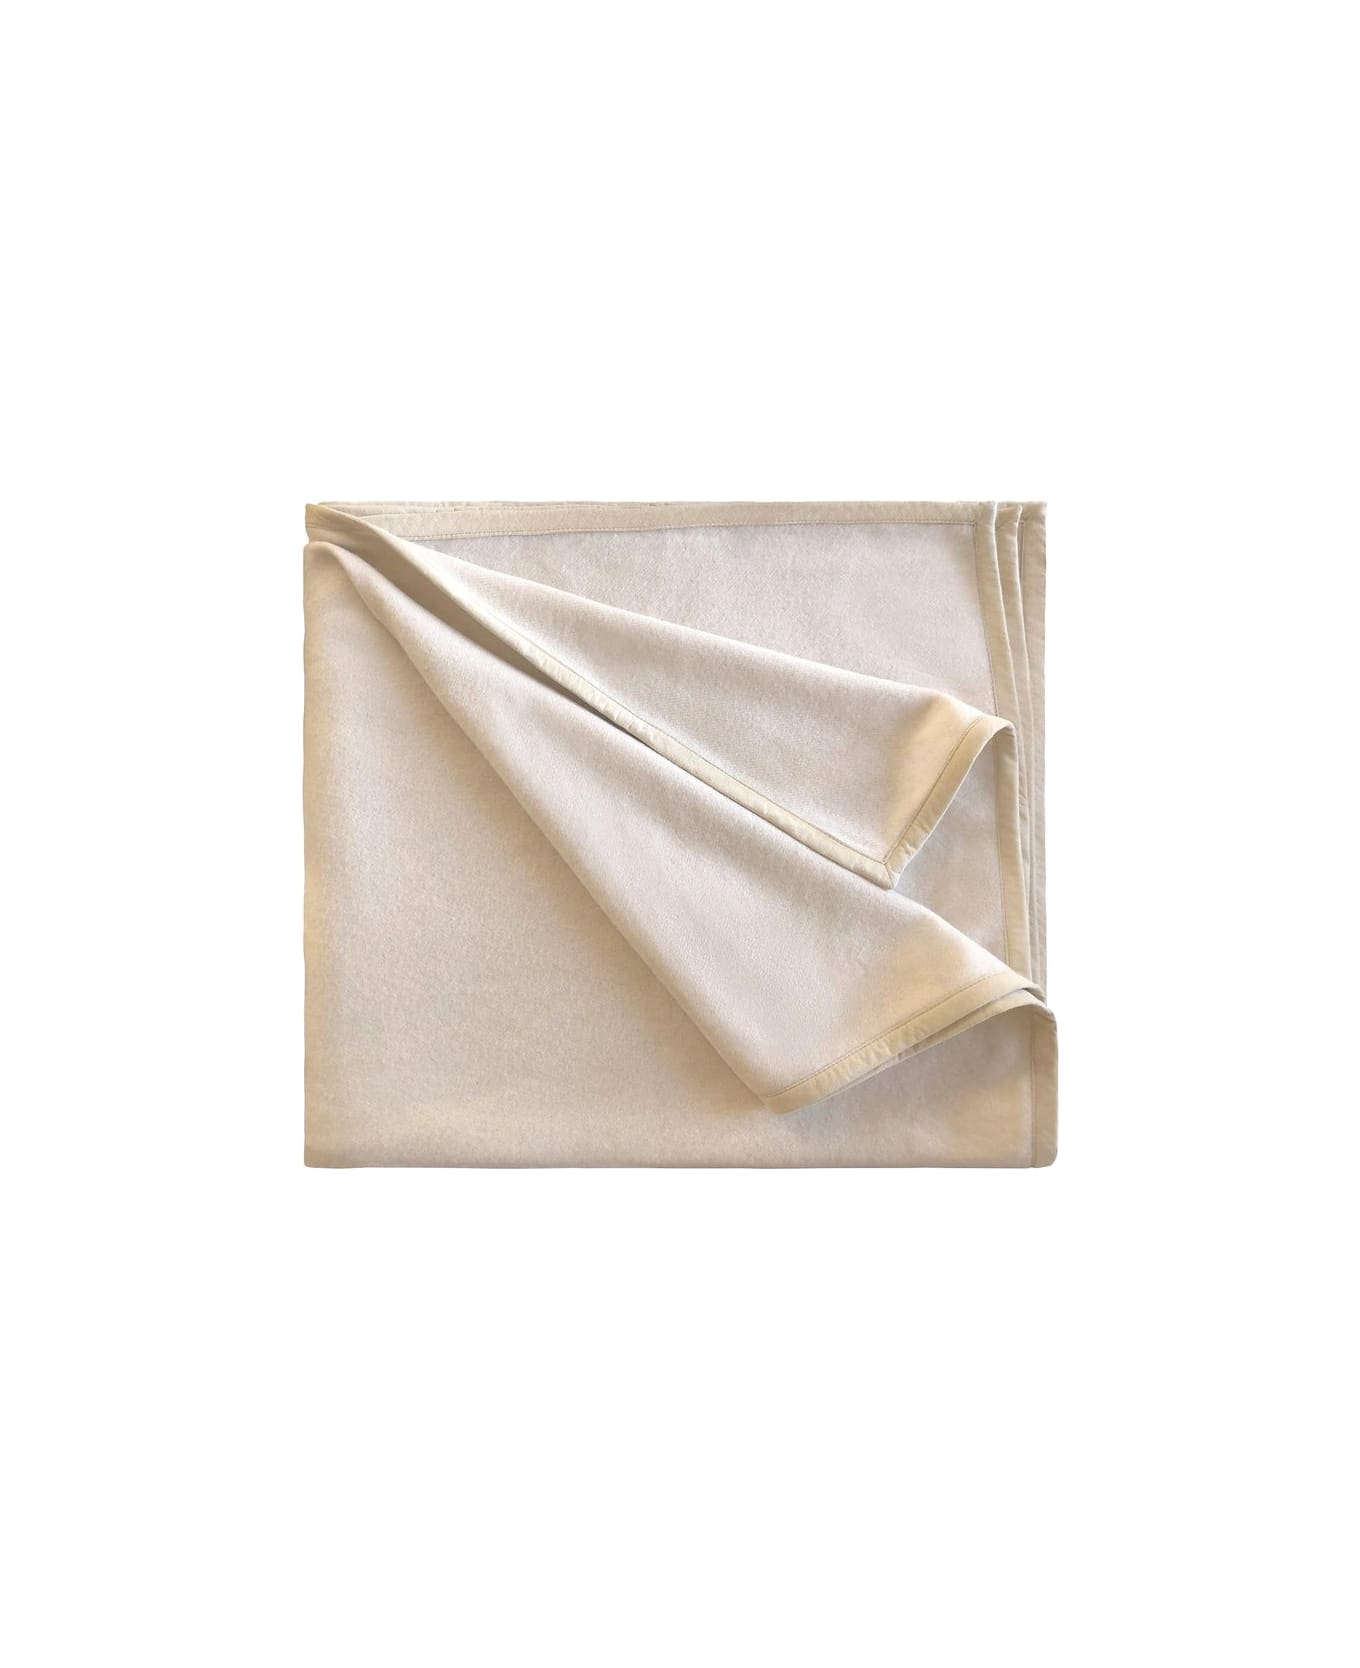 Midsummer Milano Cavalieri White Blanket - White